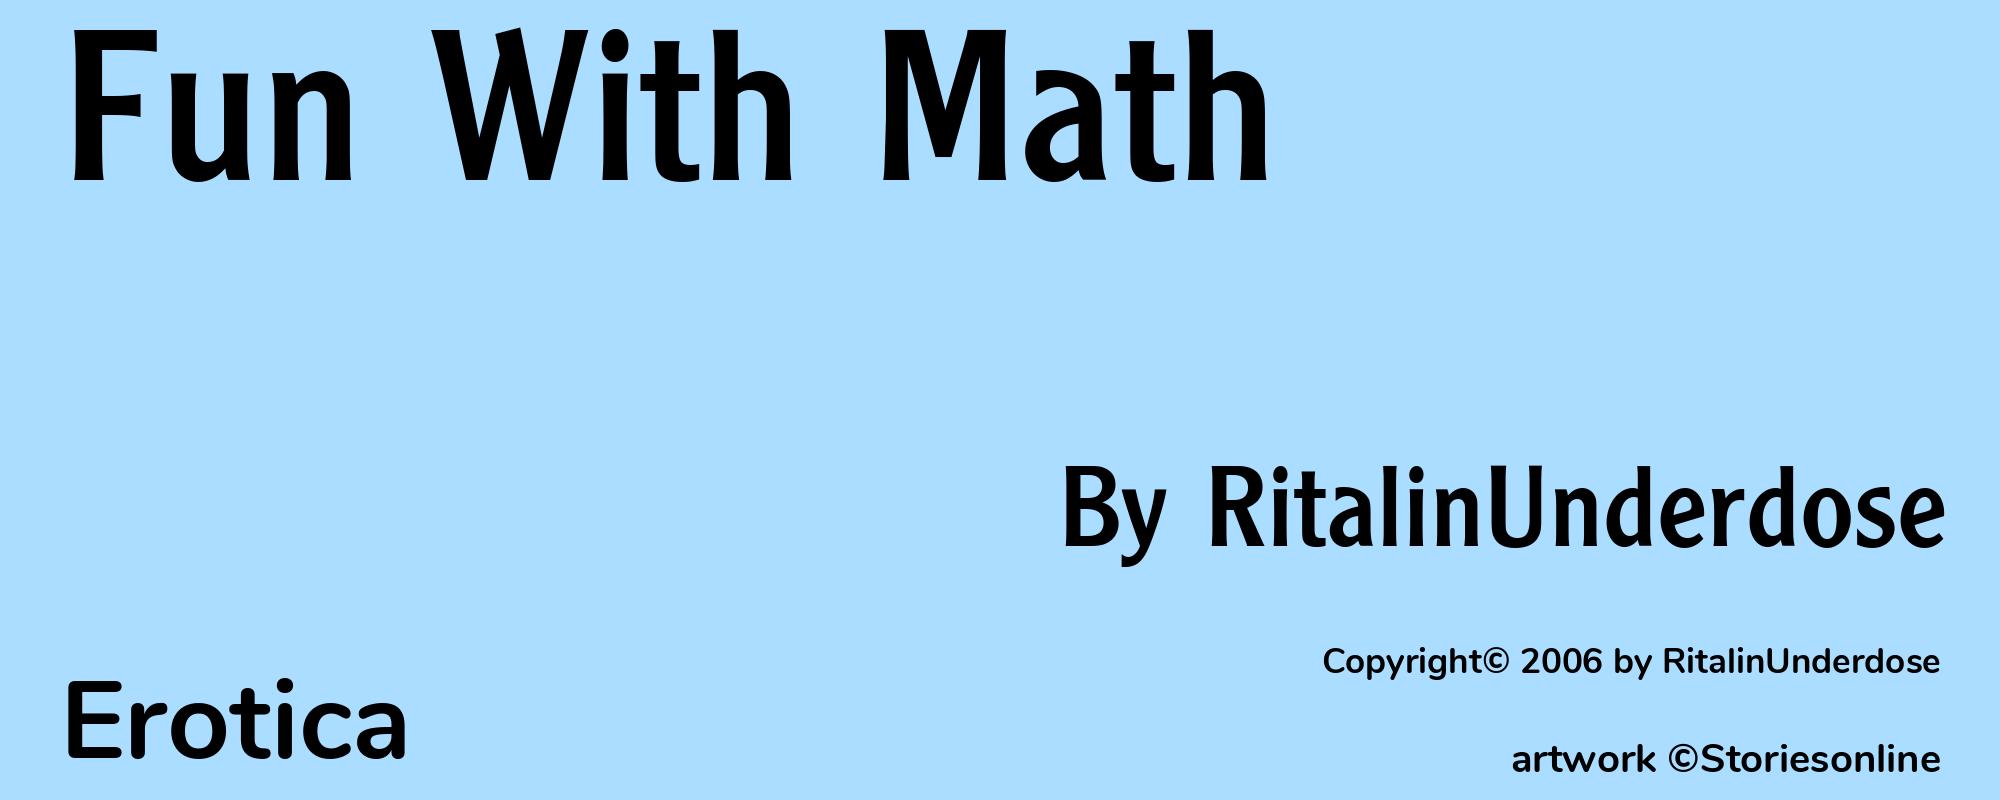 Fun With Math - Cover